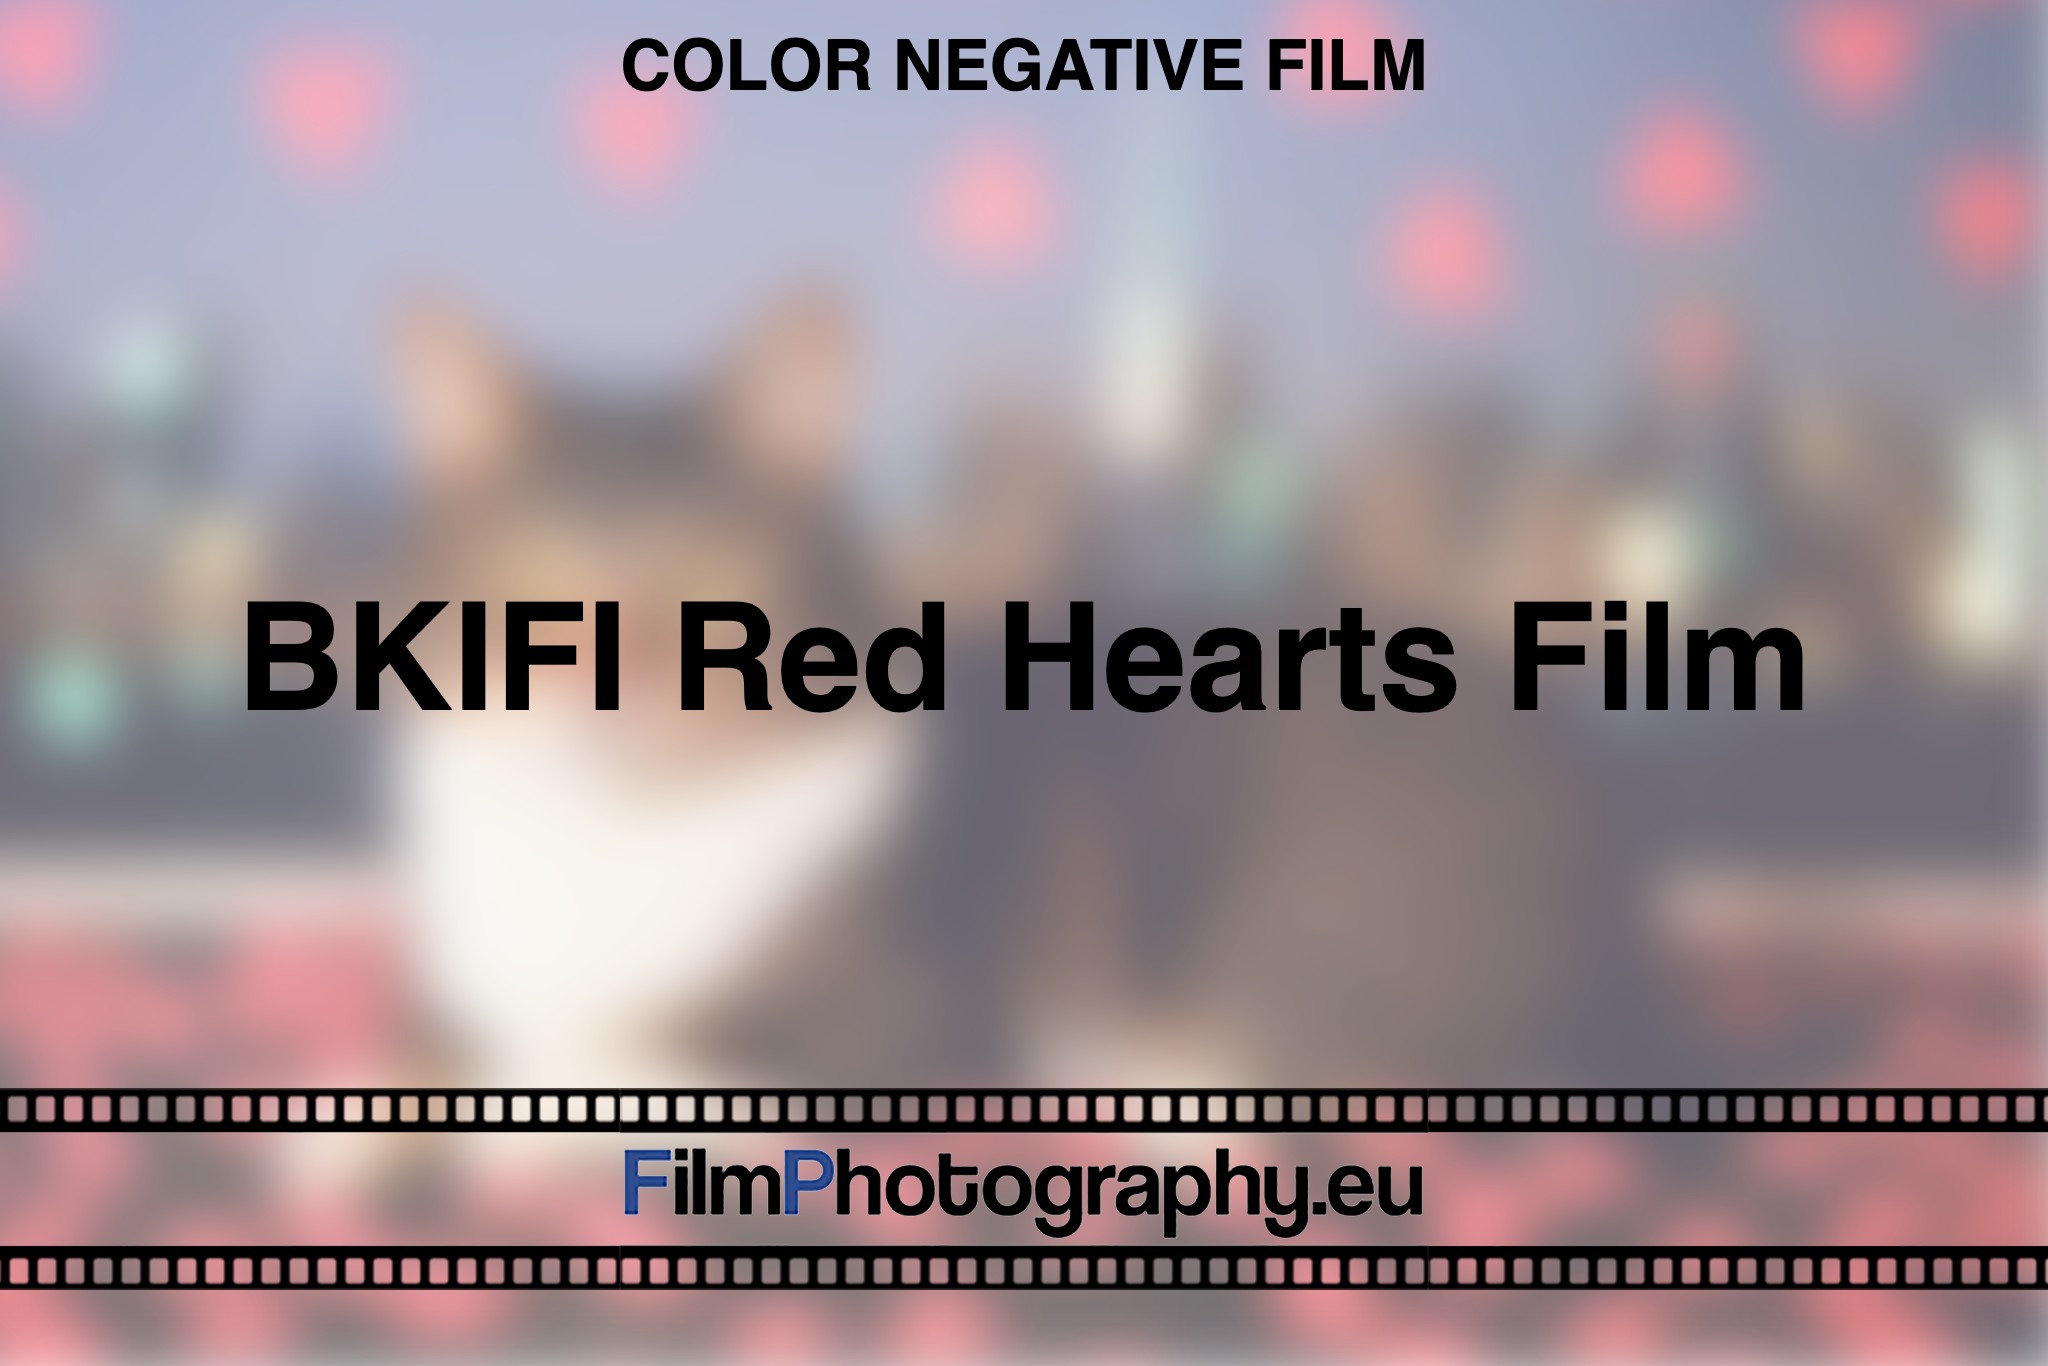 BKIFI-Red-Hearts-Film-Color-negative-film-bnv